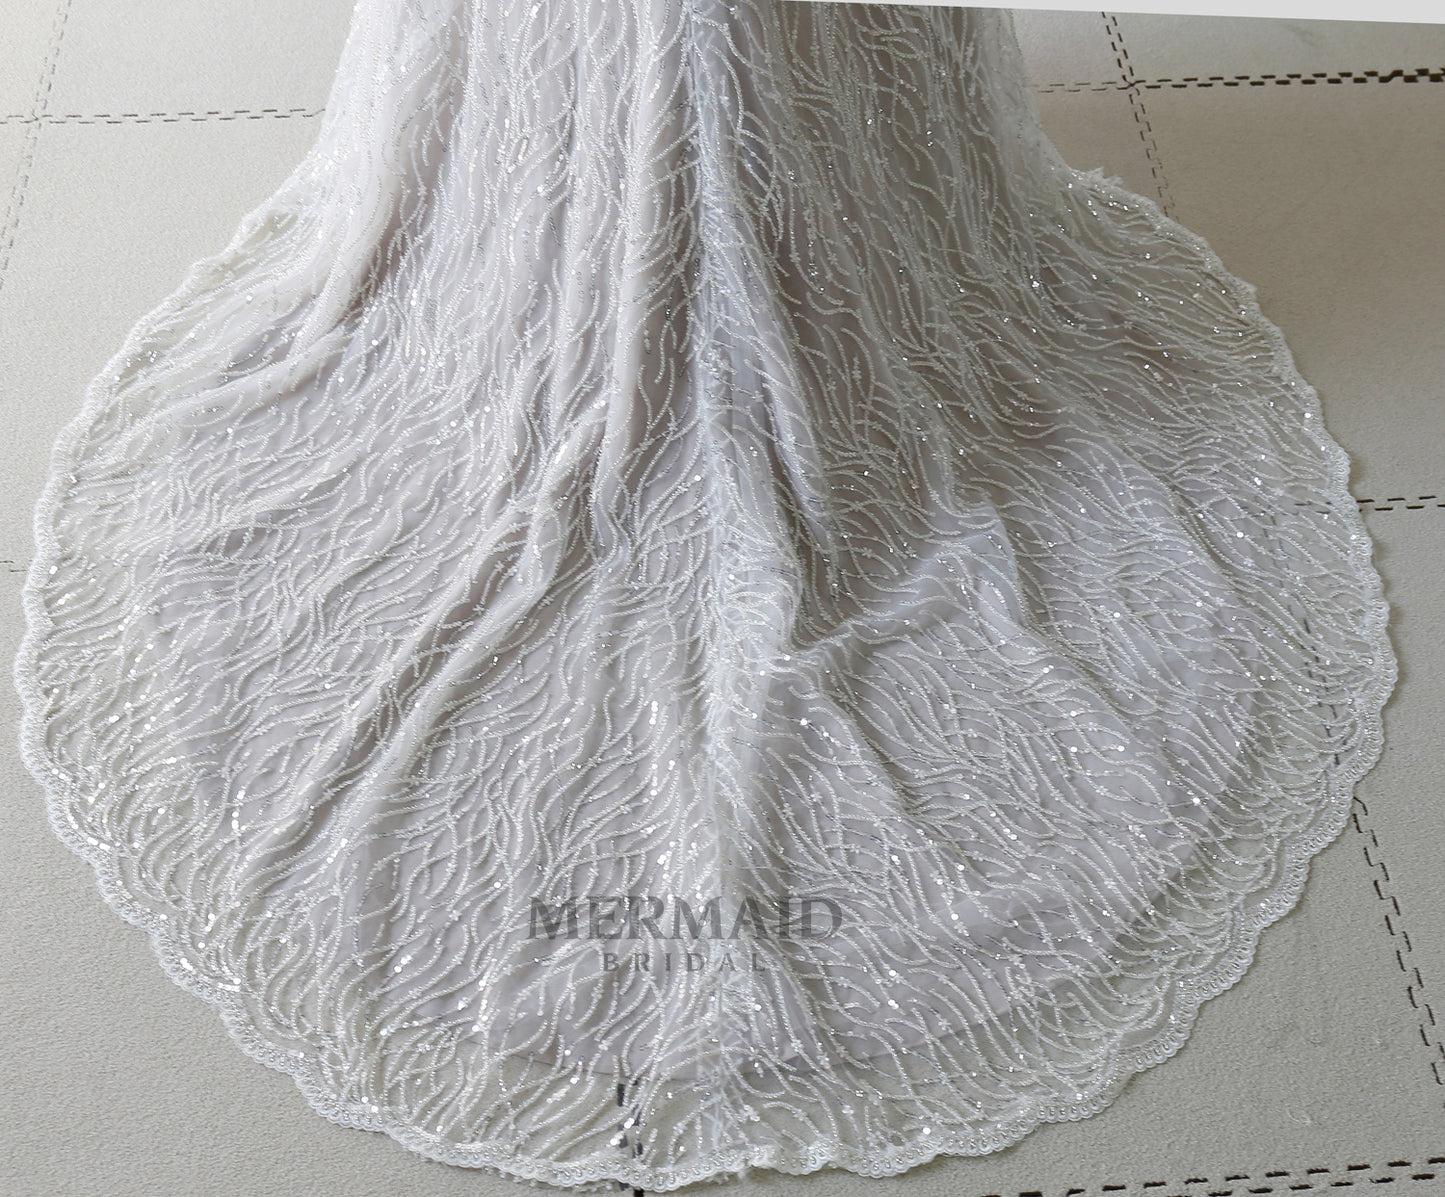 Backless Hand Work Design Heavy Beaded Mermaid Wedding Dress